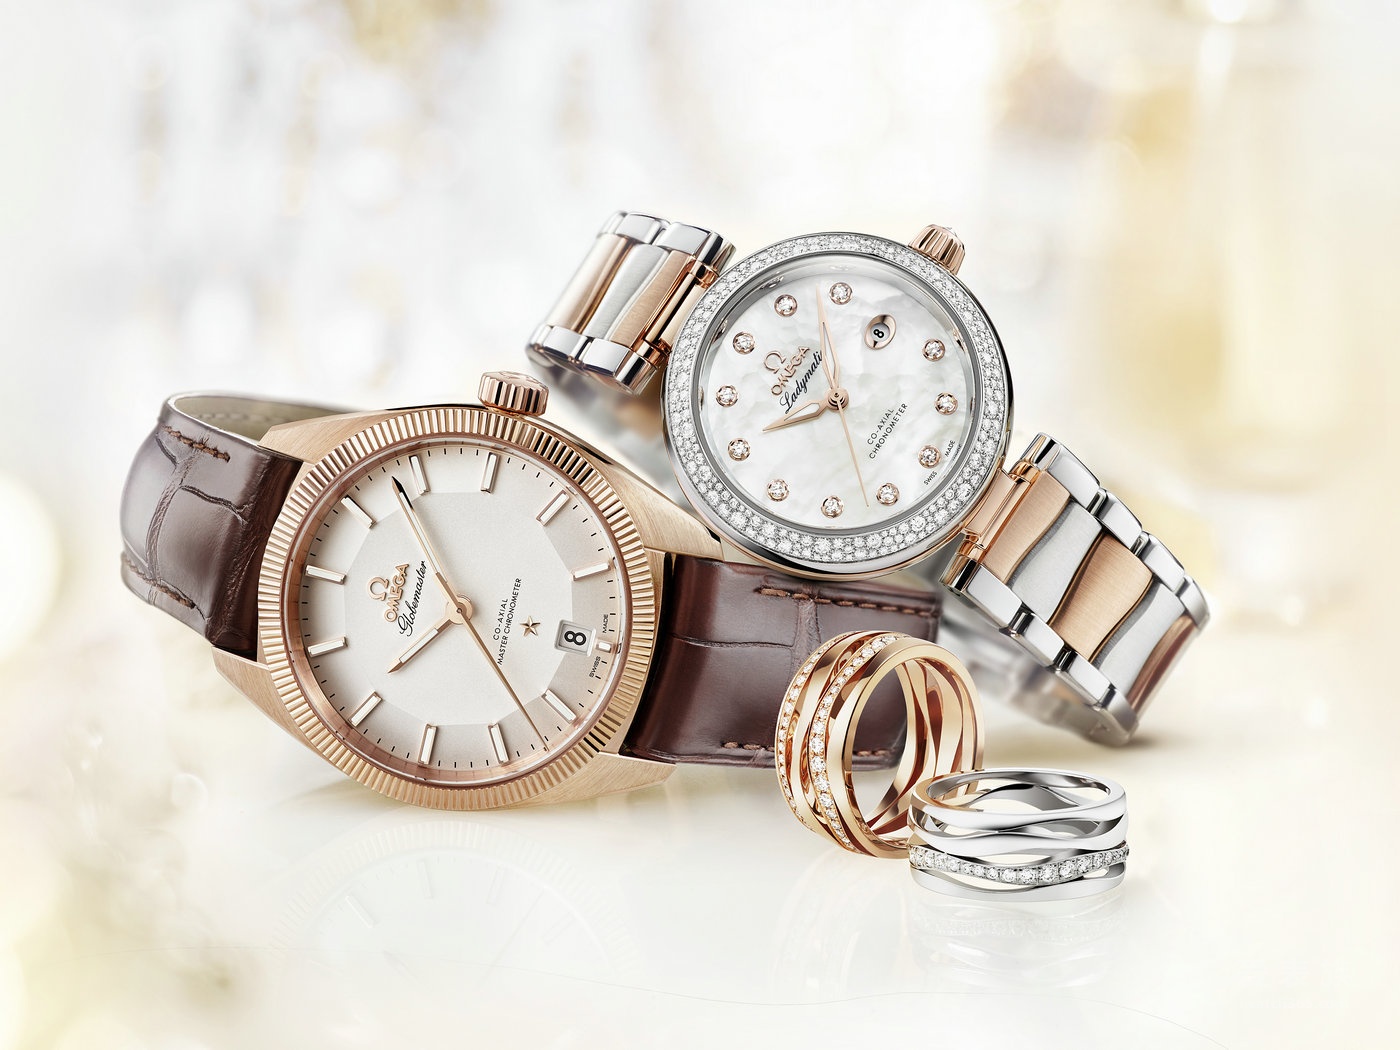 Omega replica watches 2016 Valentine's Day gift for girlfriend or boyfriend